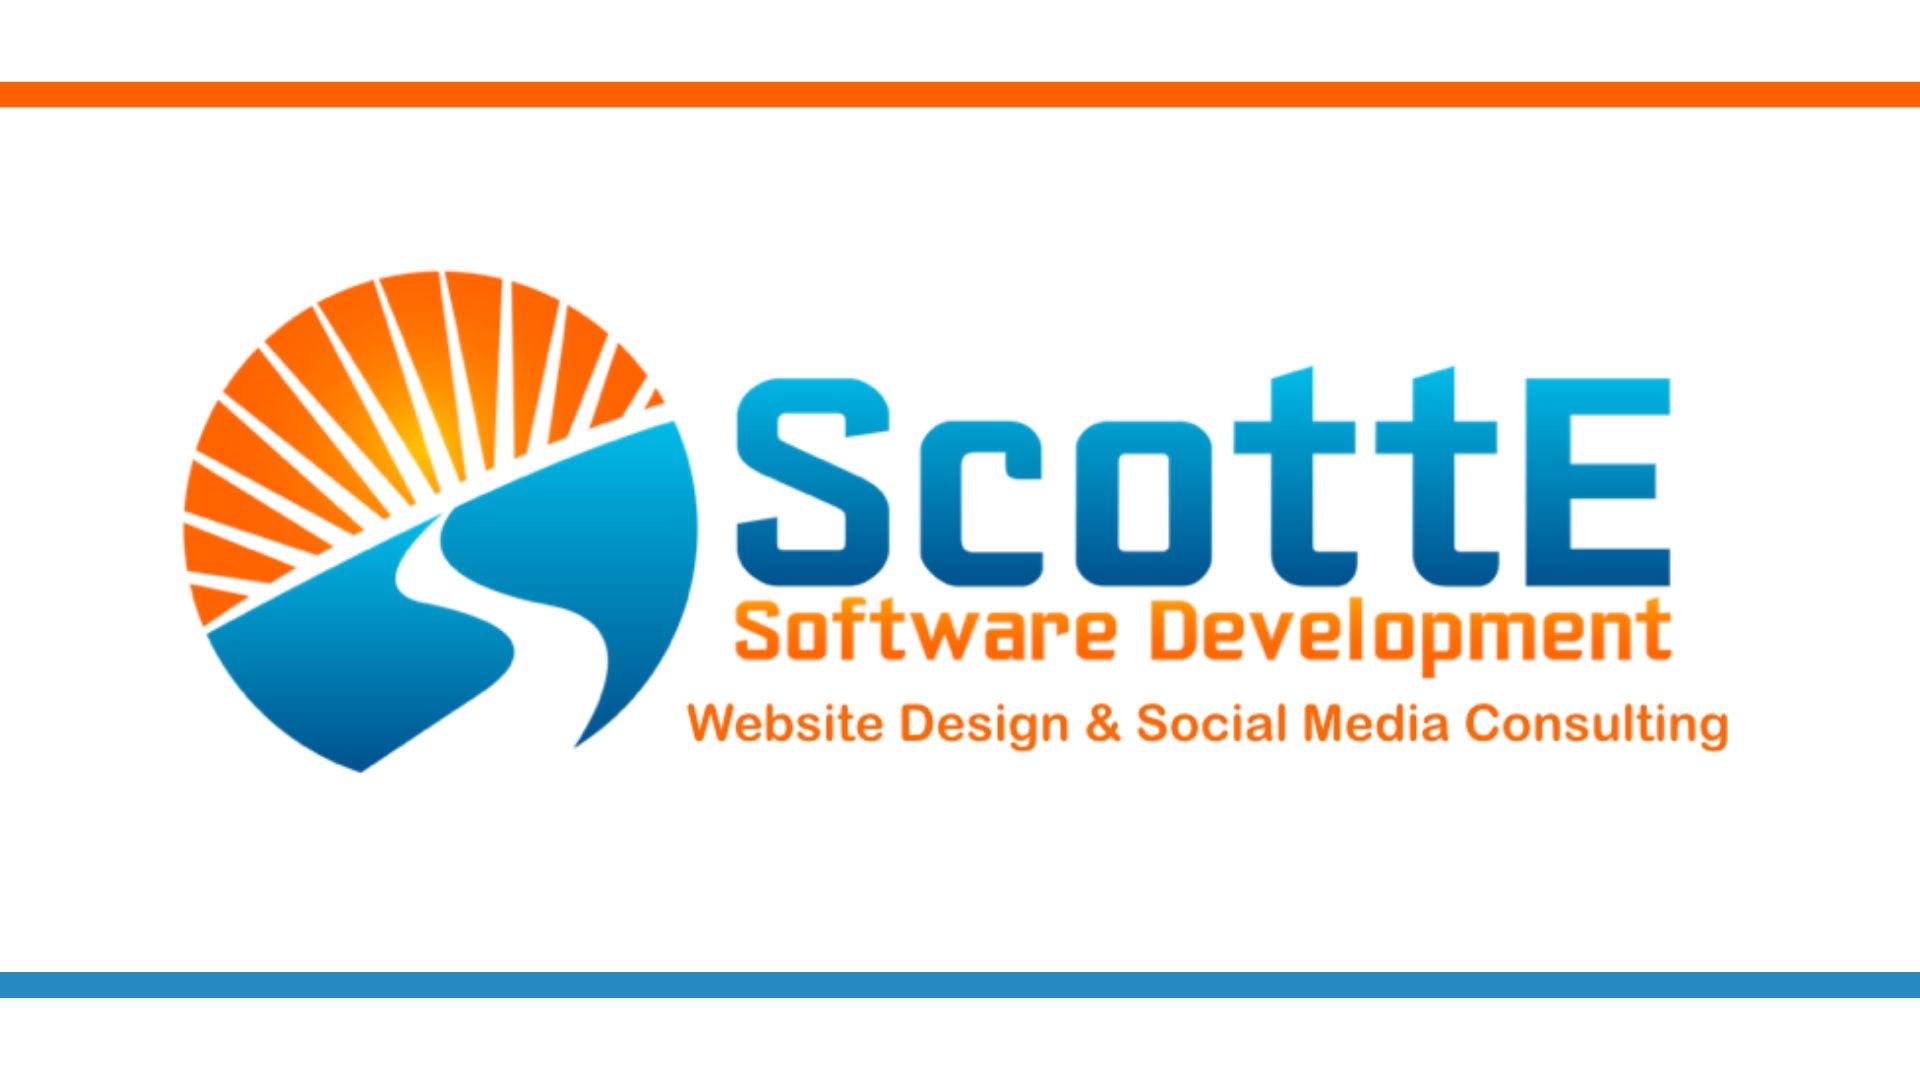 ScottE Software Development